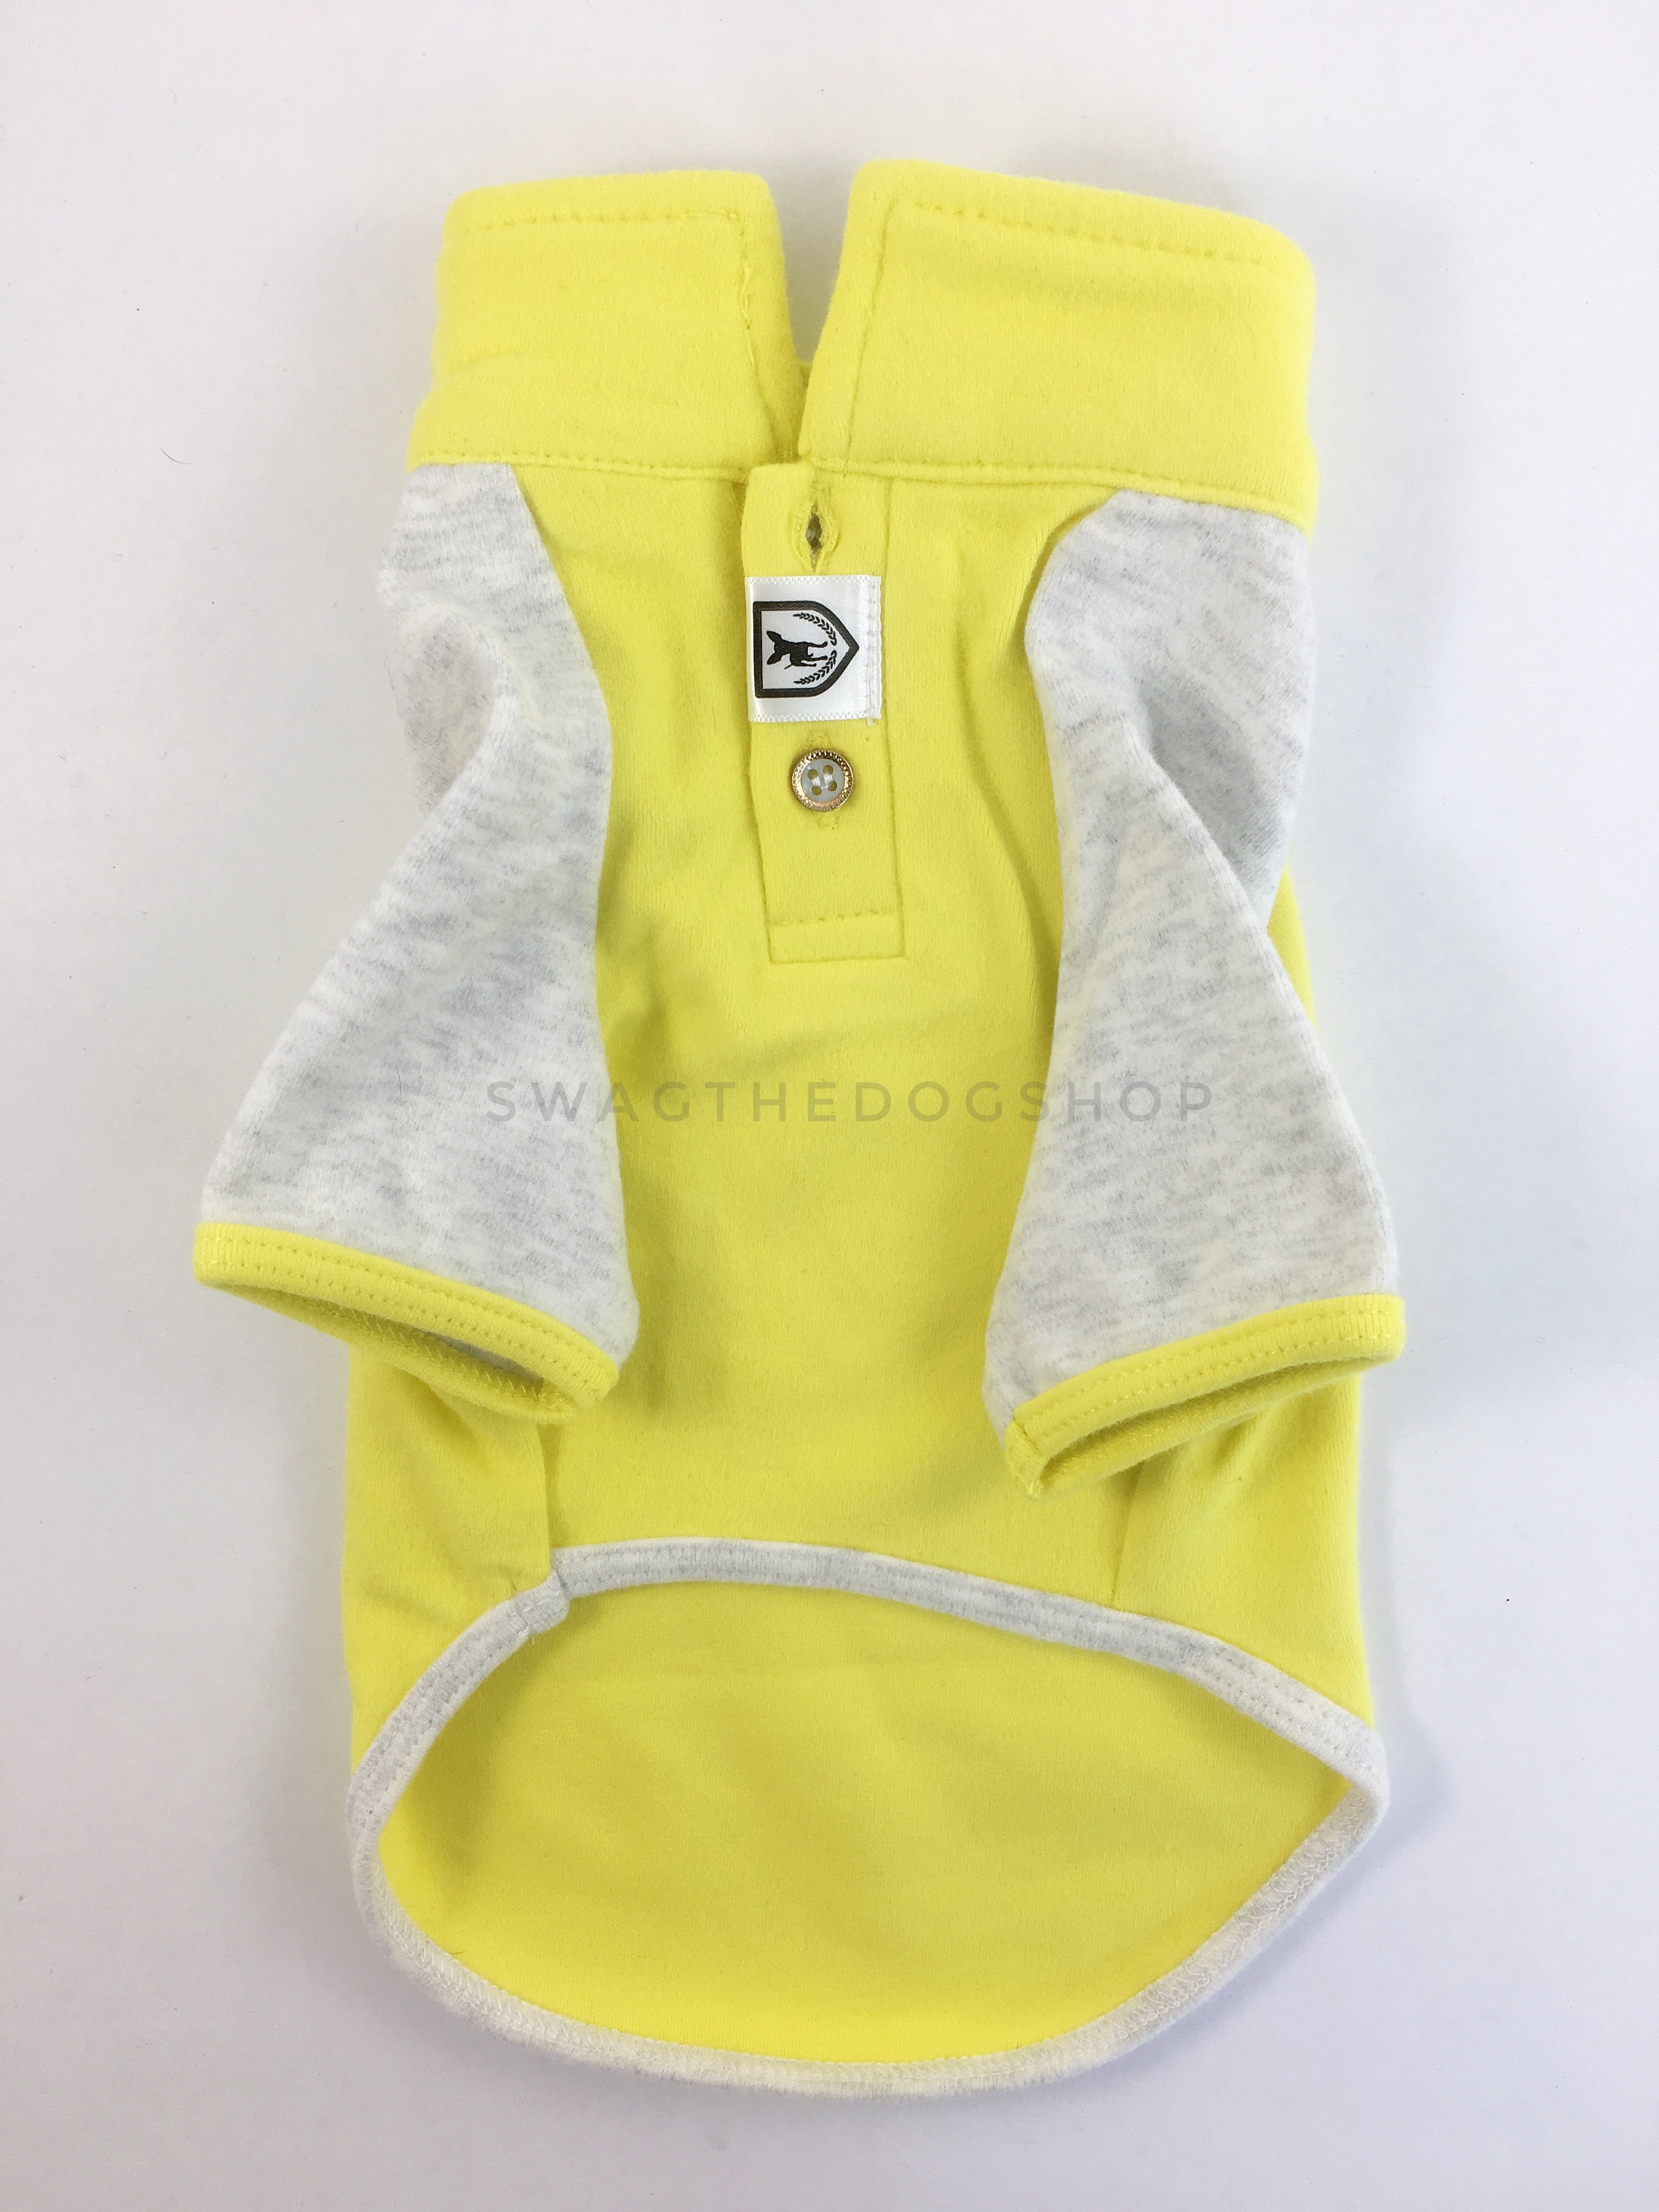 Surfside Lemon Yellow Polo Shirt - Product Front View. Lemon Yellow with Light Gray Sleeves Polo Shirt